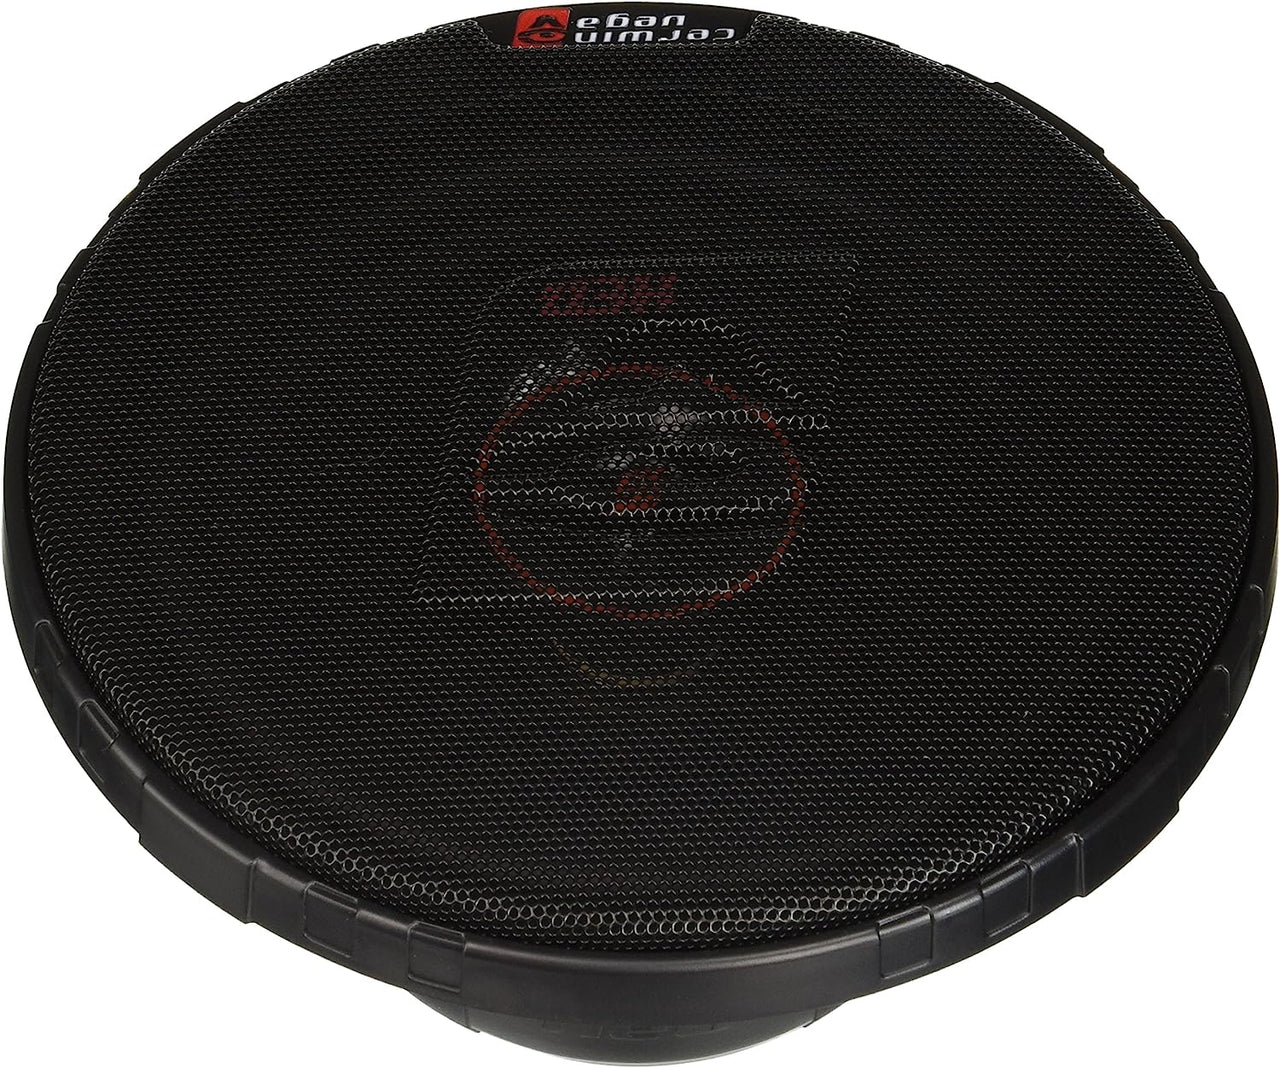 Cerwin Vega 6.5 Inch Car Motorcycle Speakers for Harley Davidson Speaker Adapter Kit